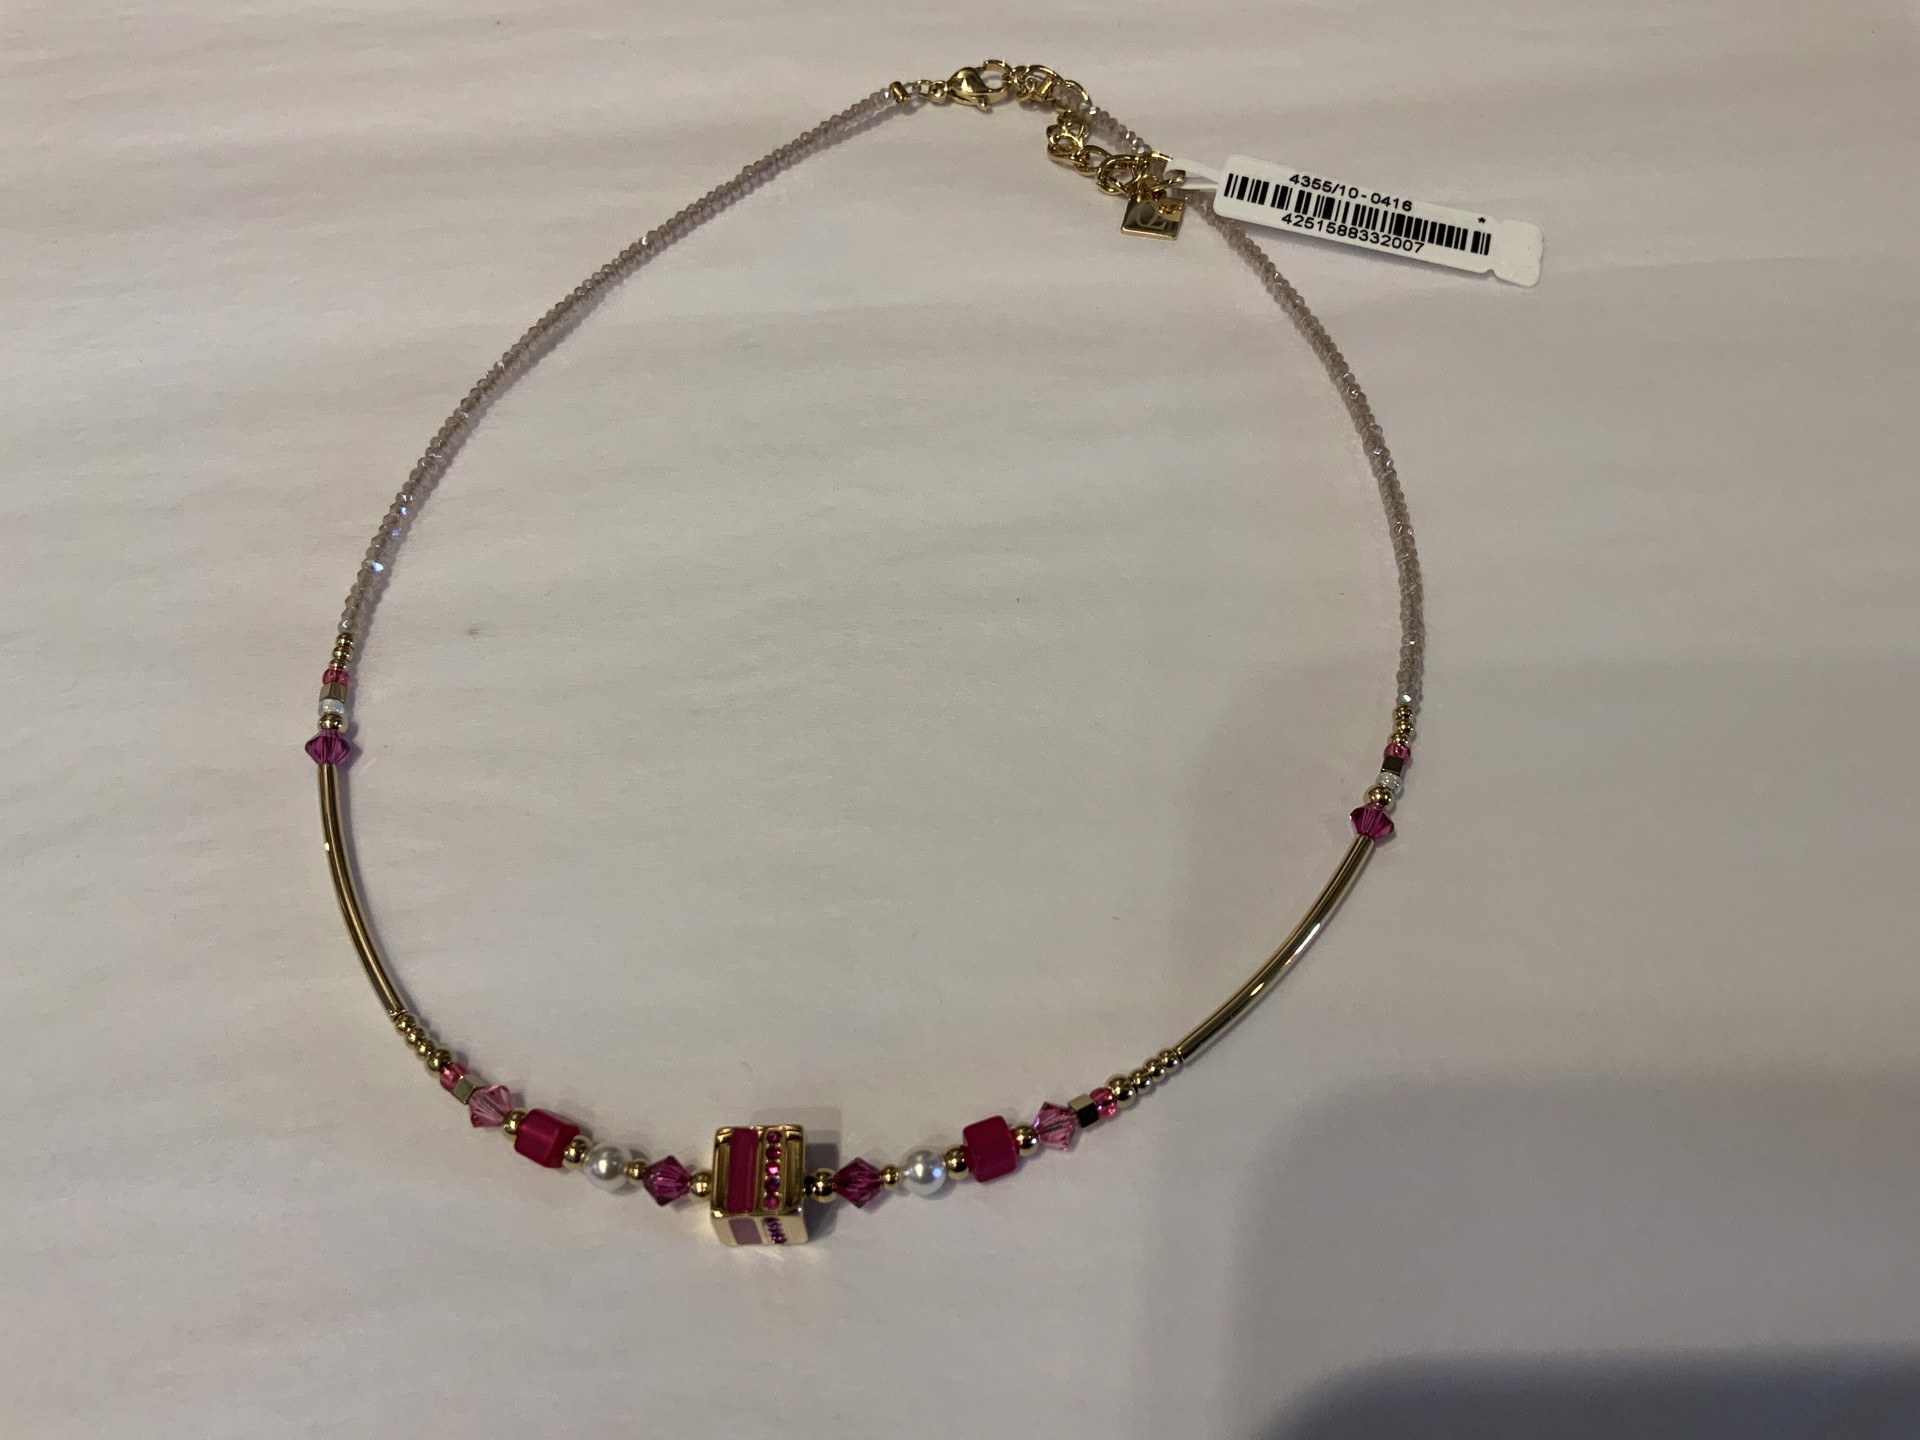 Everything Swarovski Necklace Pink by Coeur de Lion Nikaia Inc.